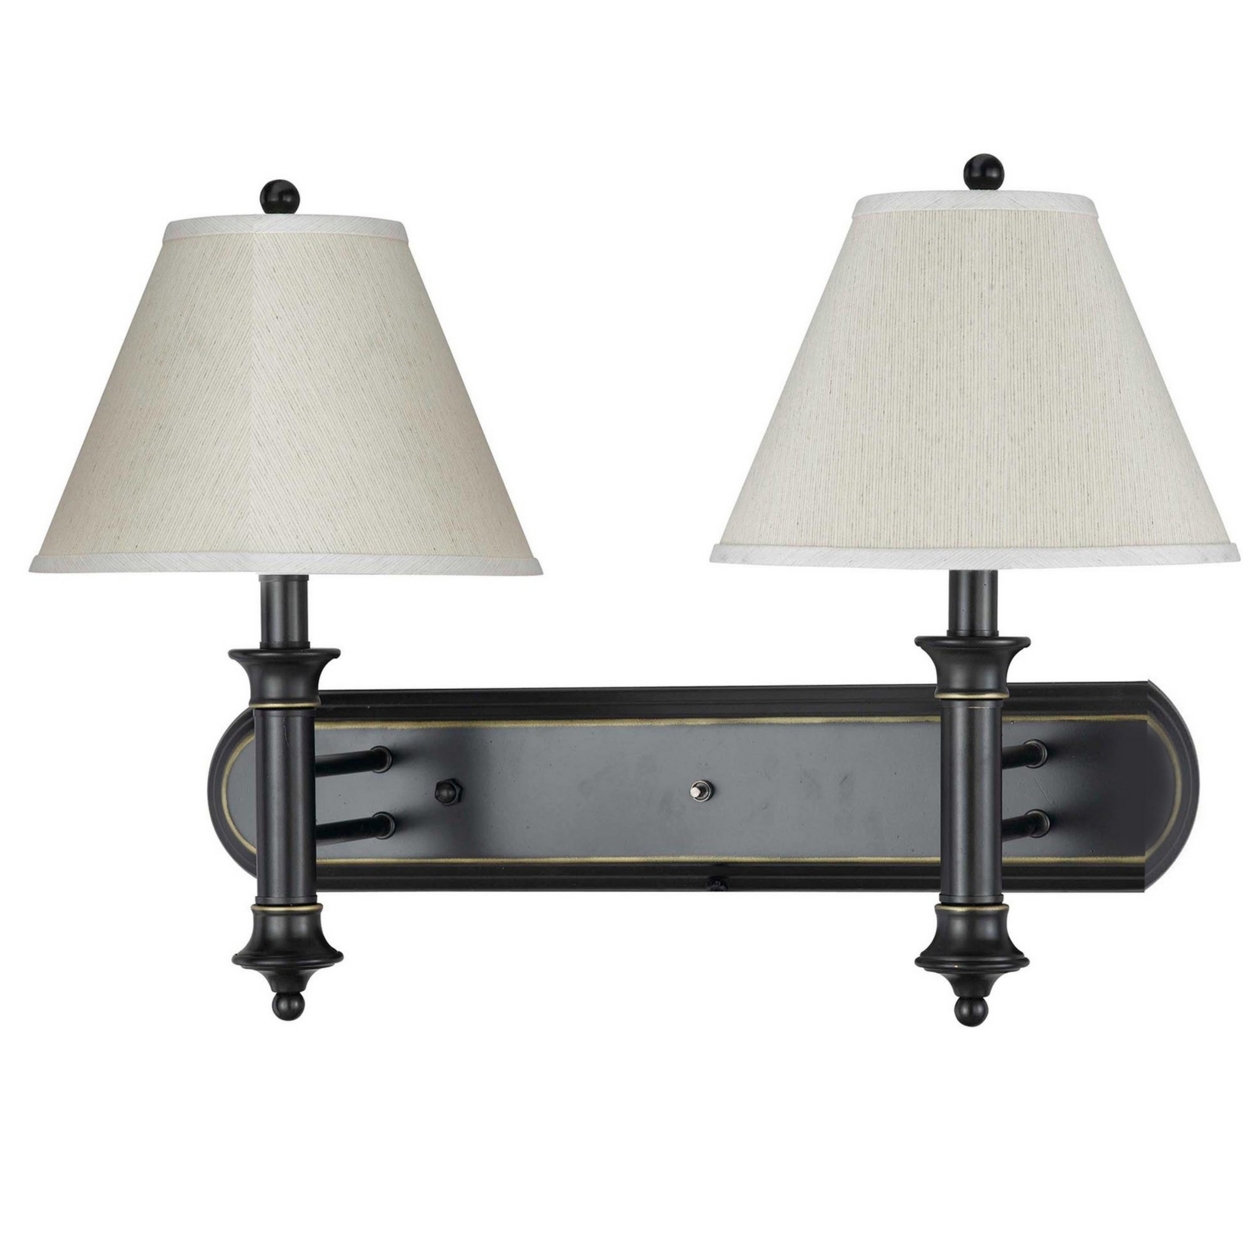 Dual Lighting Wall Lamp Pedestal Legs And Tapered Shade, Black And White- Saltoro Sherpi